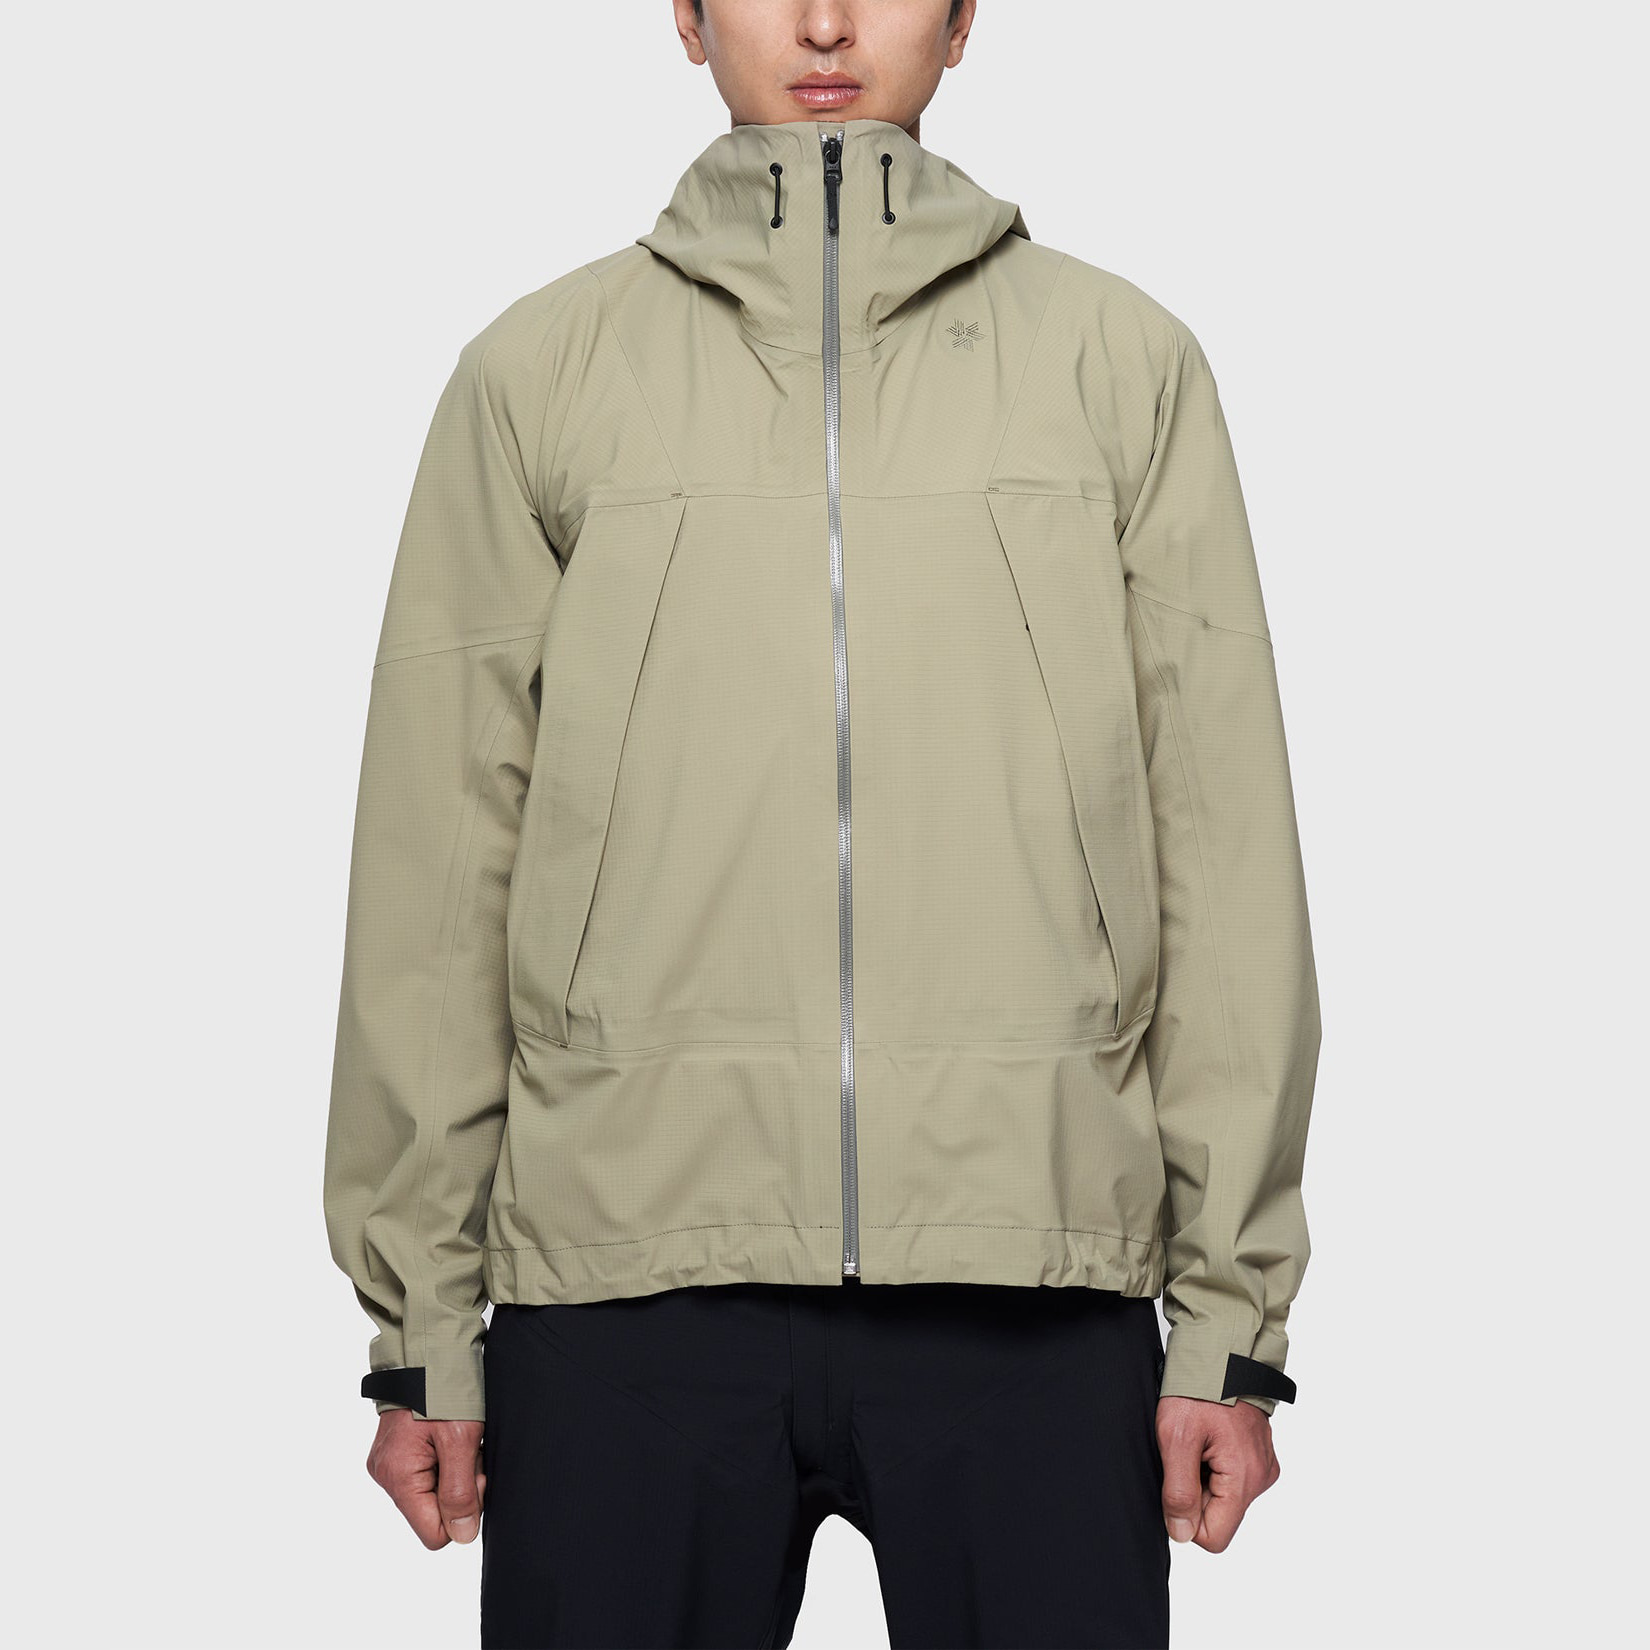 GM03100 | PERTEX SHIELDAIR All Weather Jacket